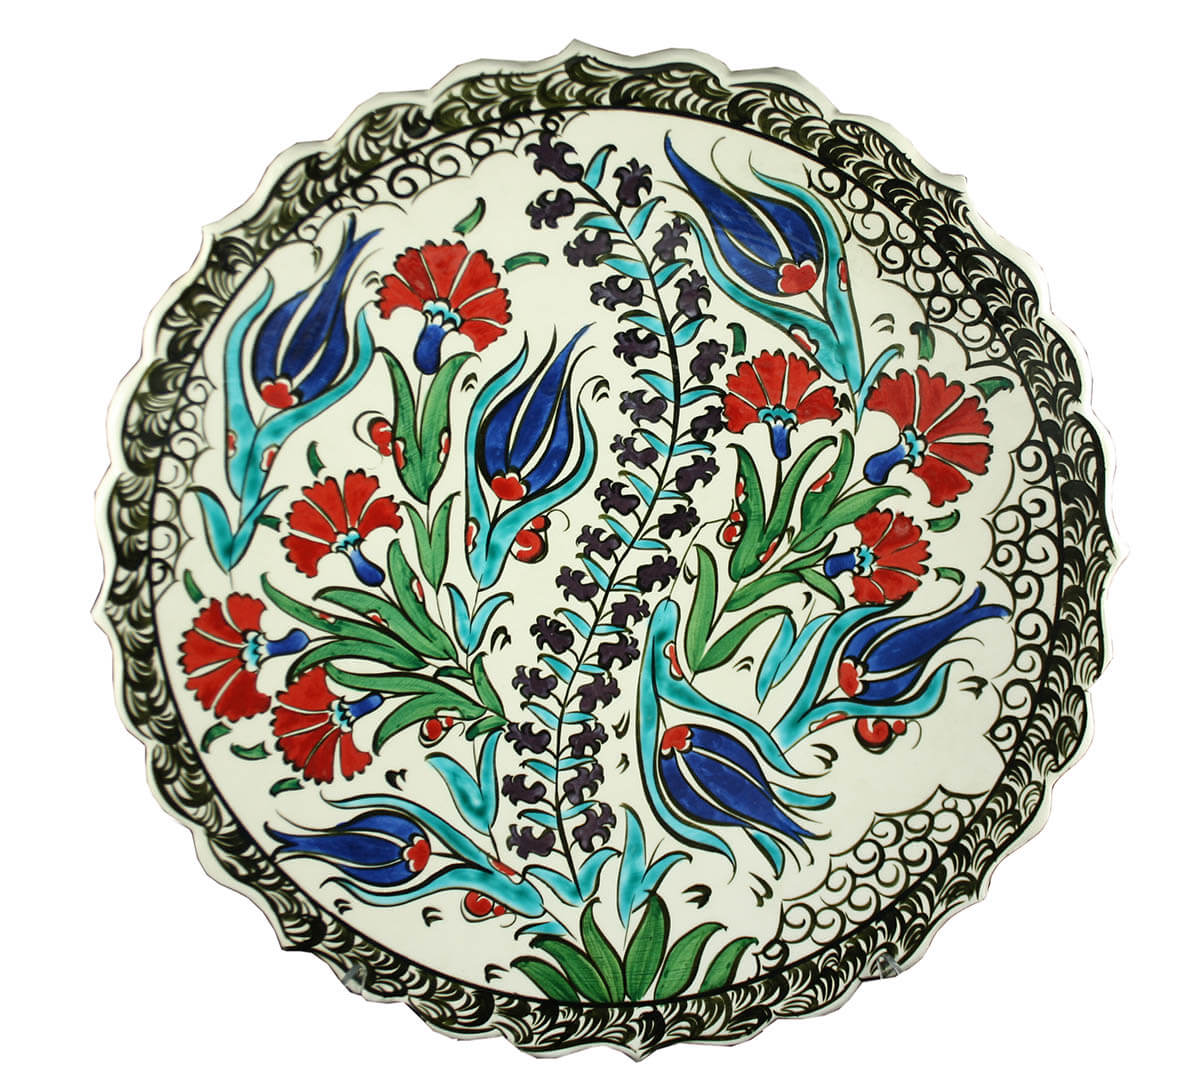 karanfil-lale-falan-turk-motif-sekil-iznik-cini-iznik-tabak-ruzgarli-bahce-ruzgarli-bah-jpg.1567